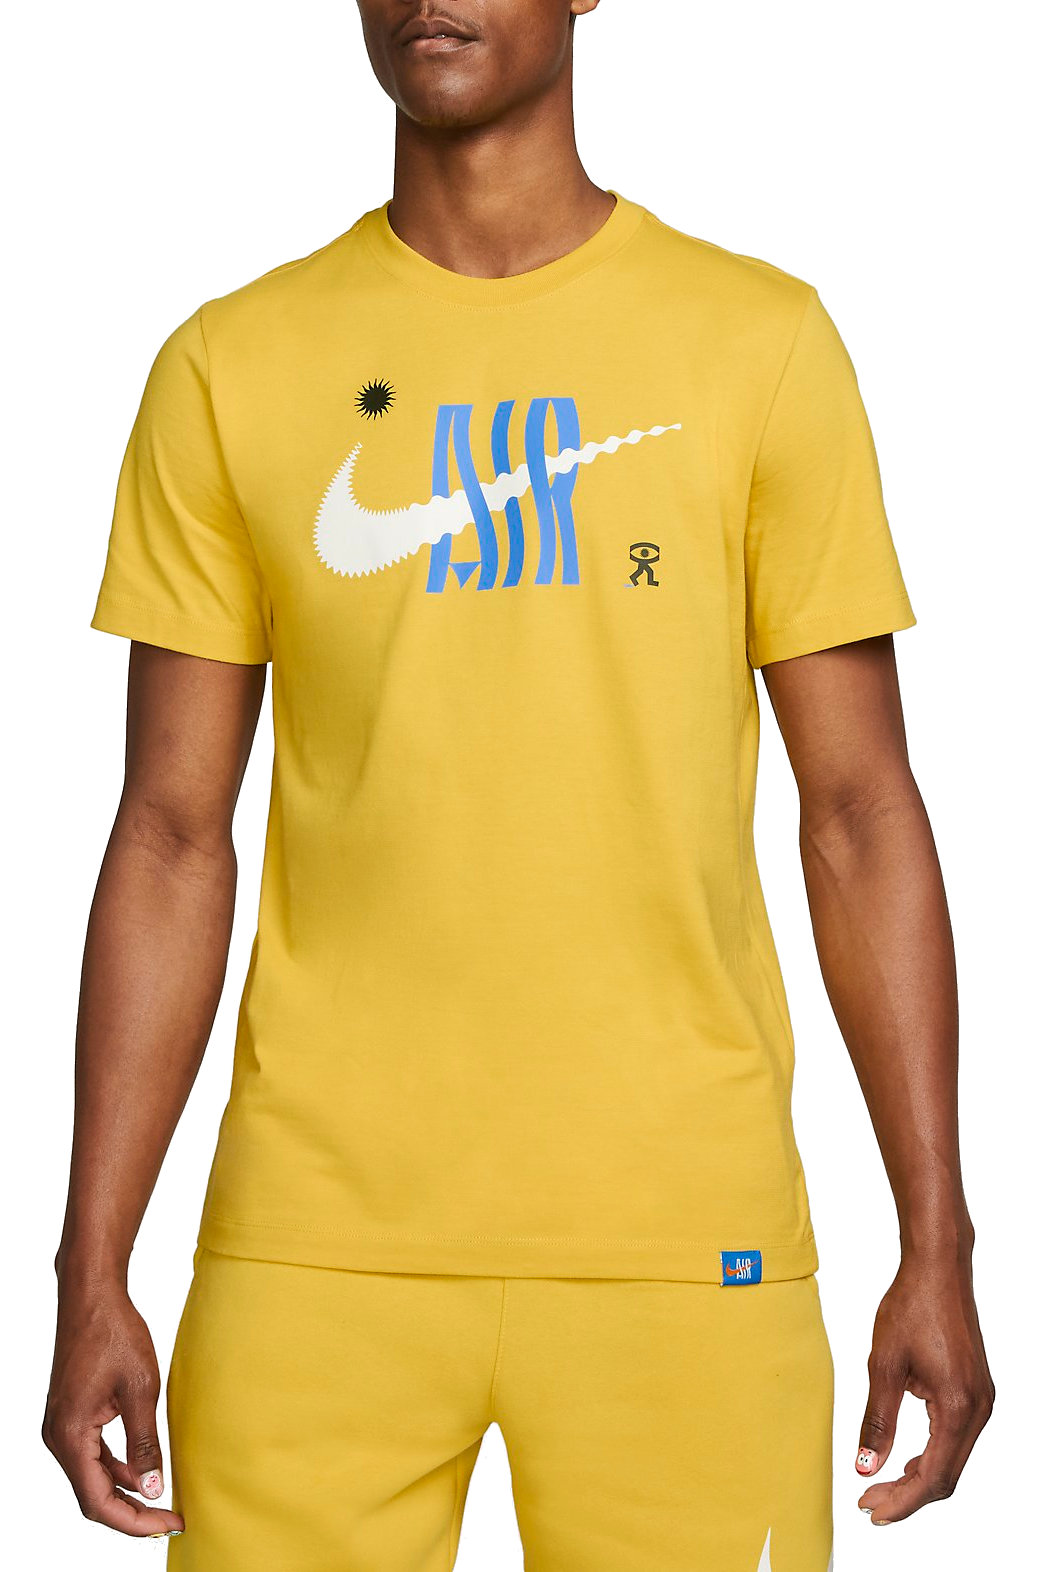 T-shirt Nike Sportswear DNA - Top4Running.com